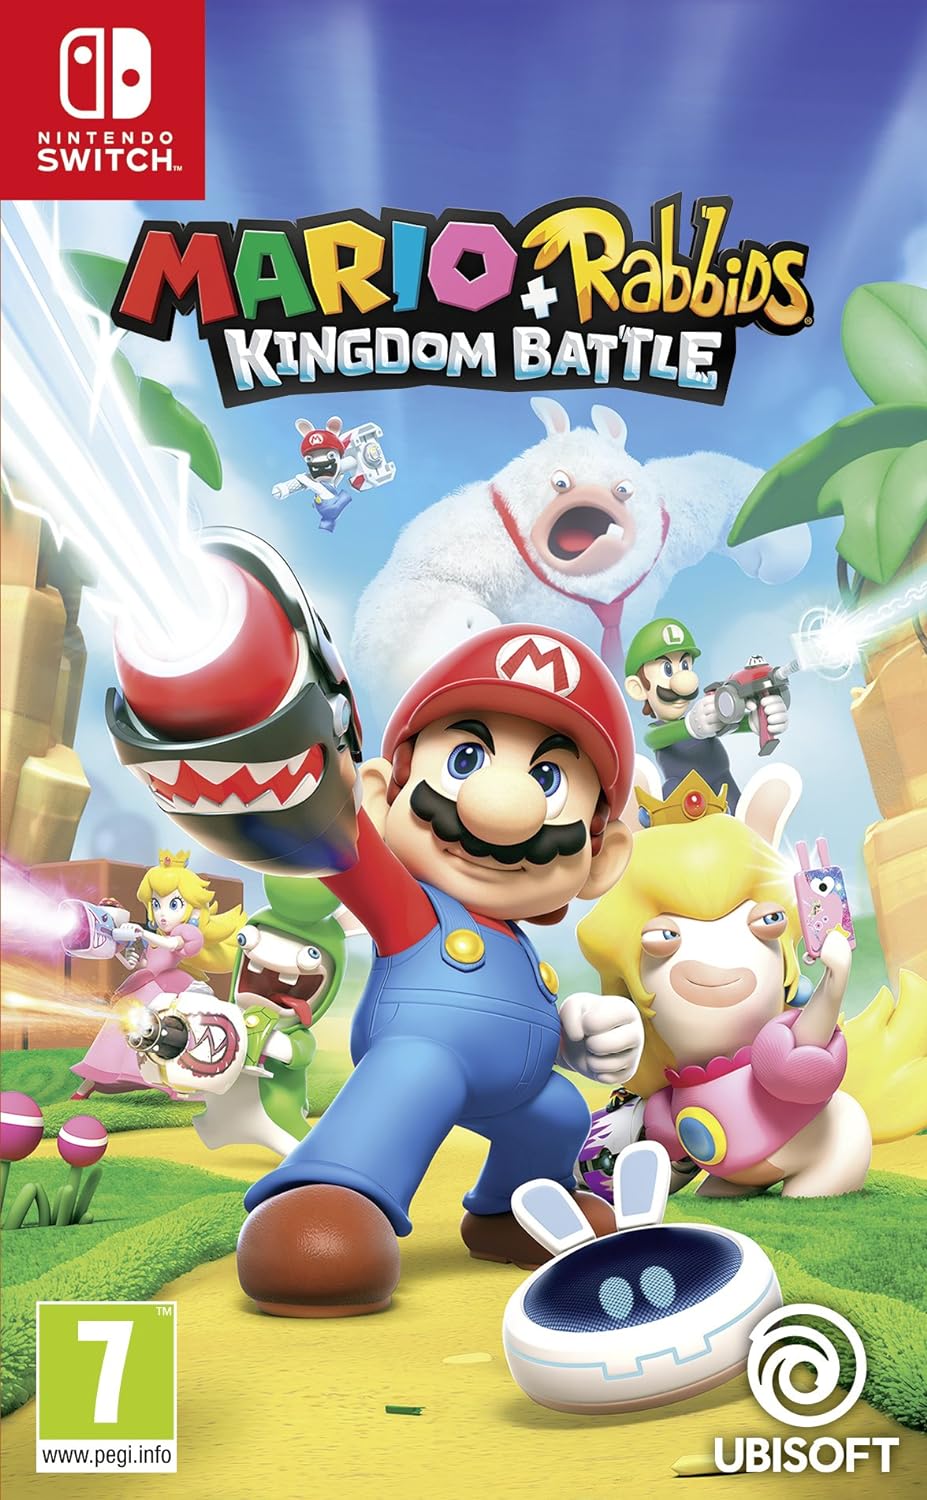 Mario + Rabbids Kingdom Battle, Ubisoft, A